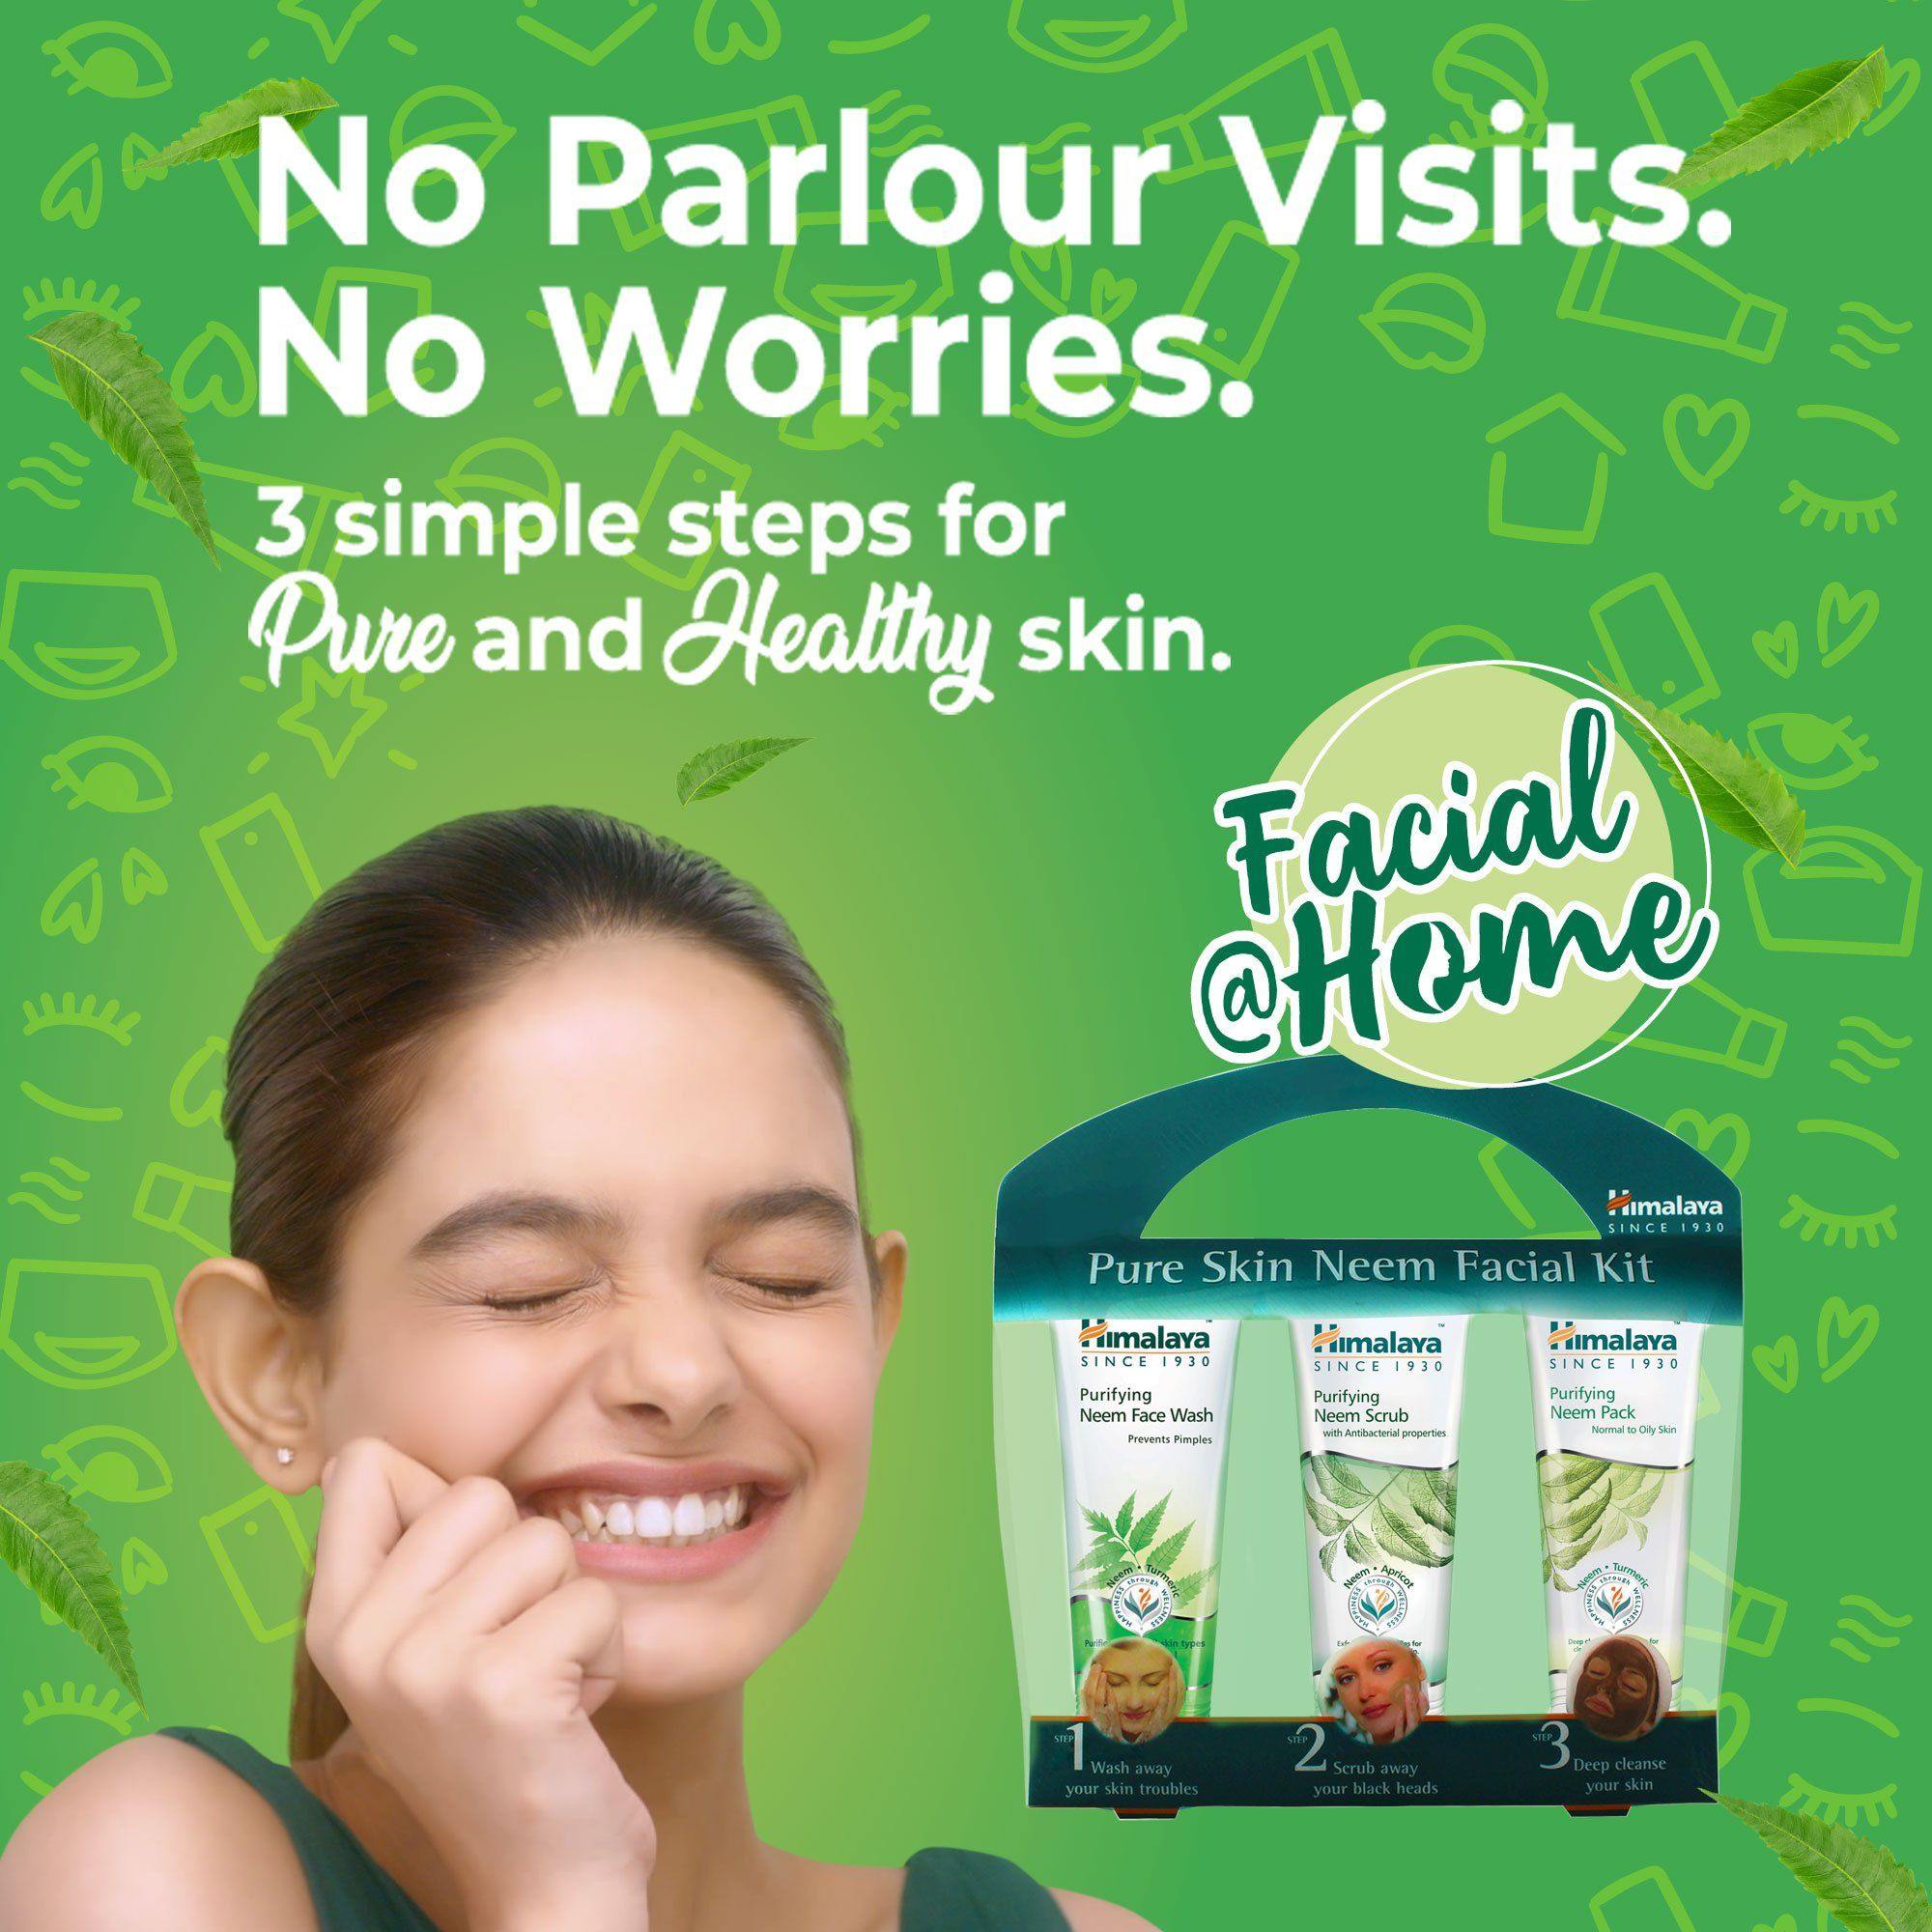 Himalaya Pure Skin Neem Facial Kit - Purifying neem face wash, face scrub, and face pack